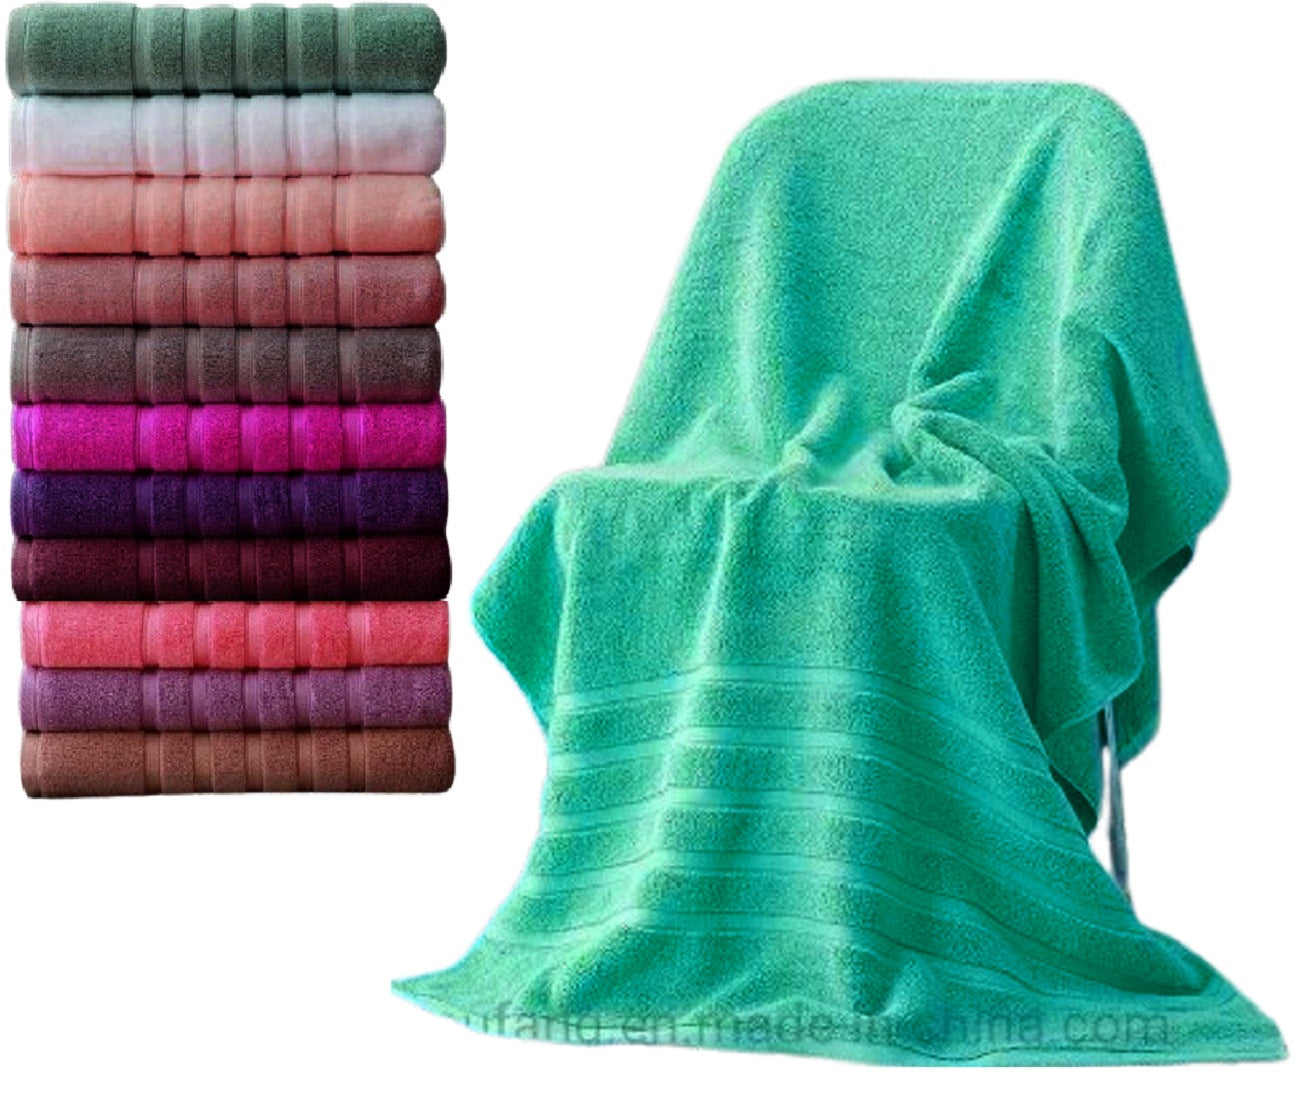 "Bigger & Better: 2-Pack of Extra Large Super Bath Sheet Towels"